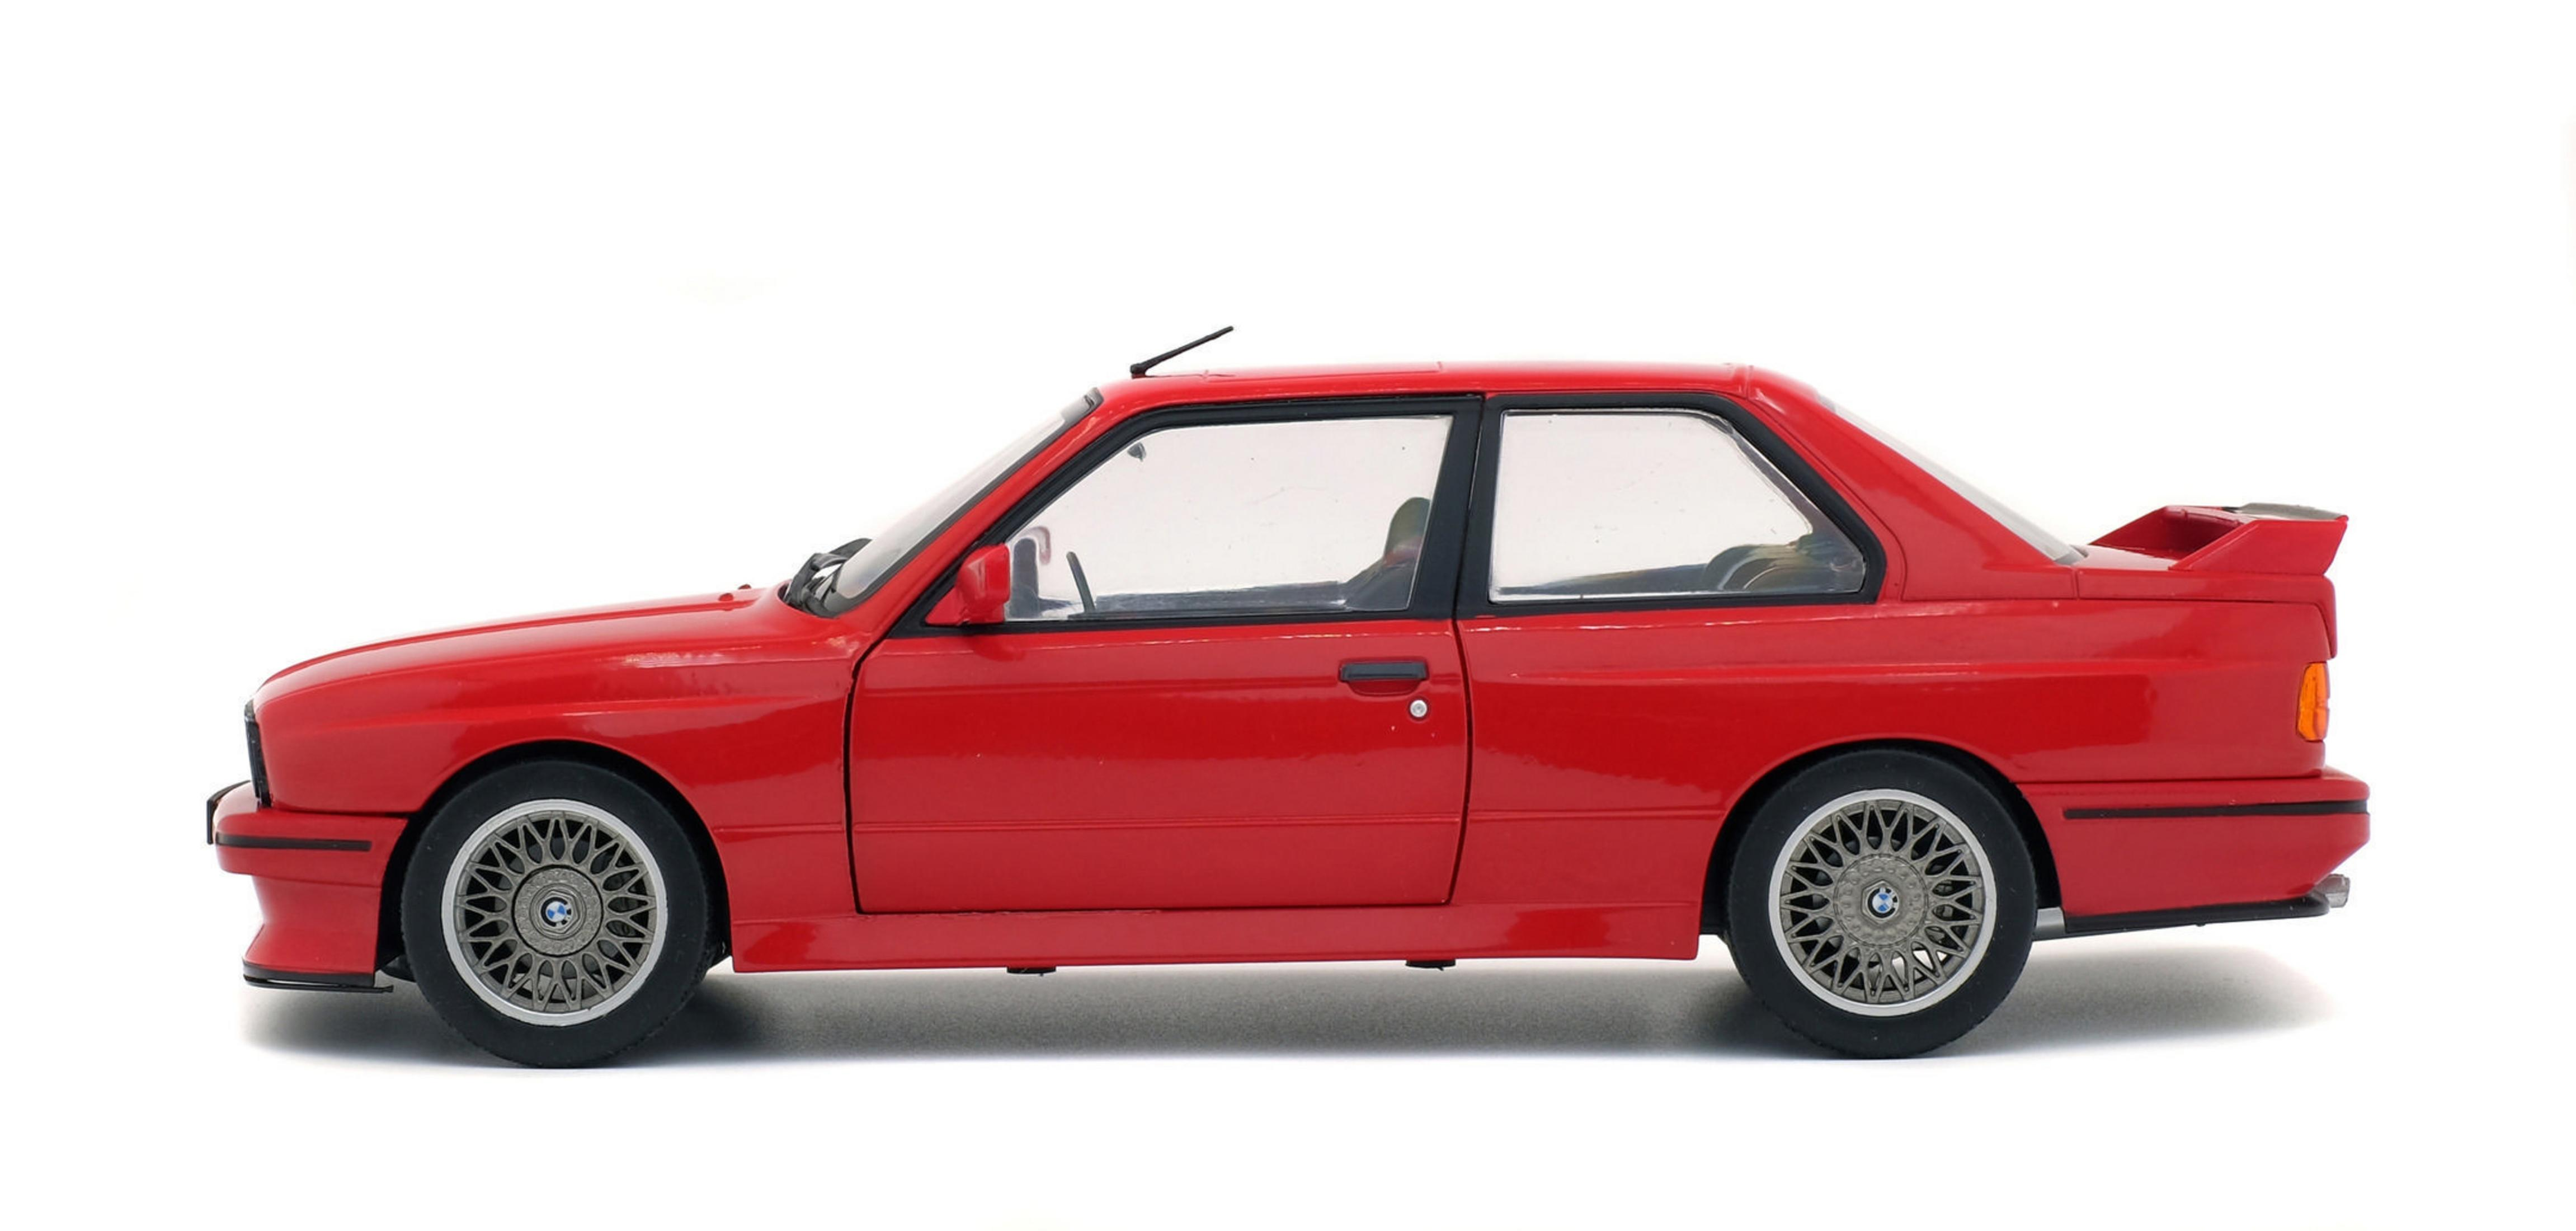 SOLIDO 421184390 1:18 (1986) Rot Spielzeugmodellauto M3 BMW